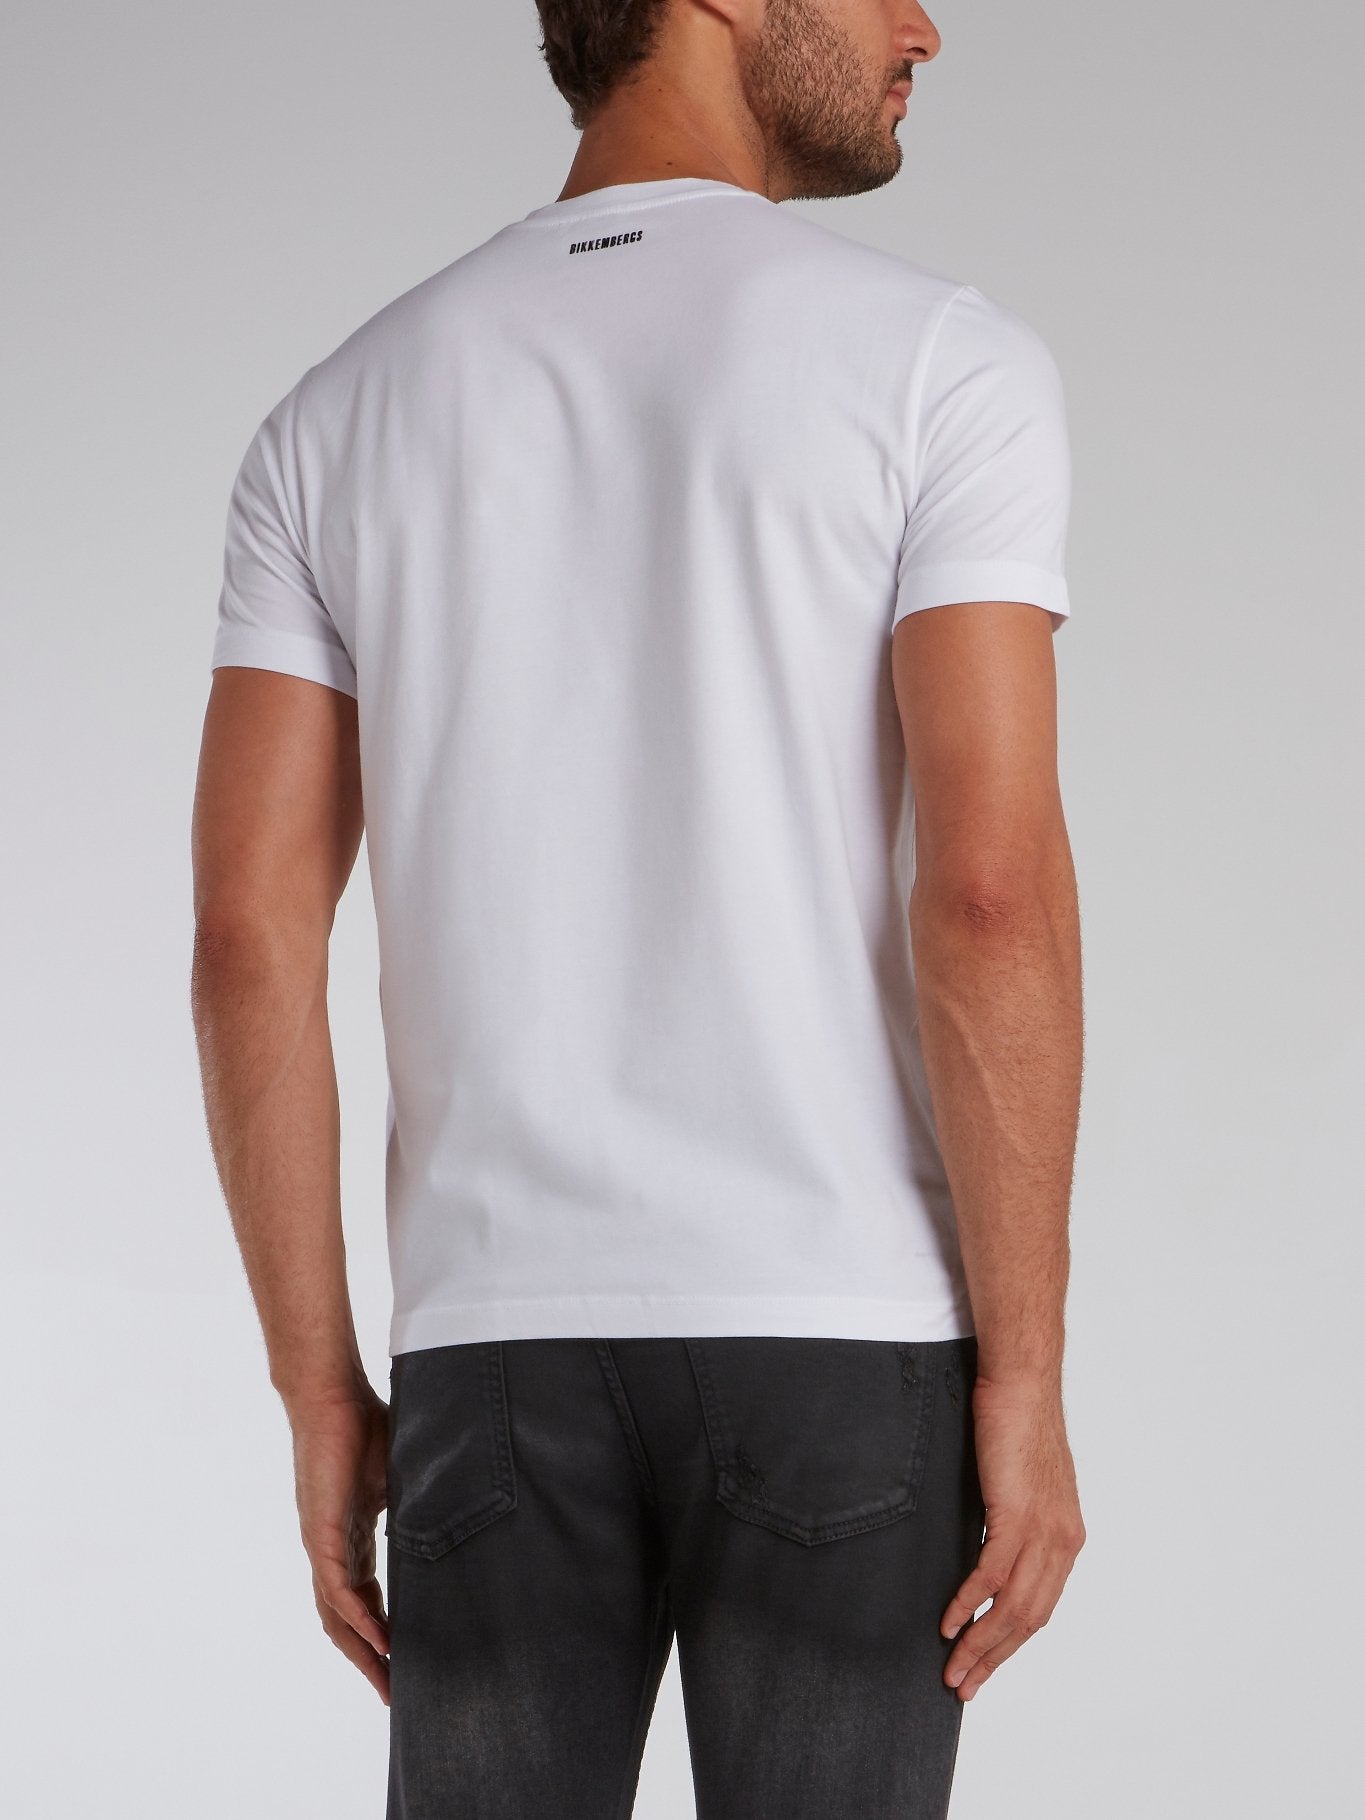 White Graphic Print T-Shirt